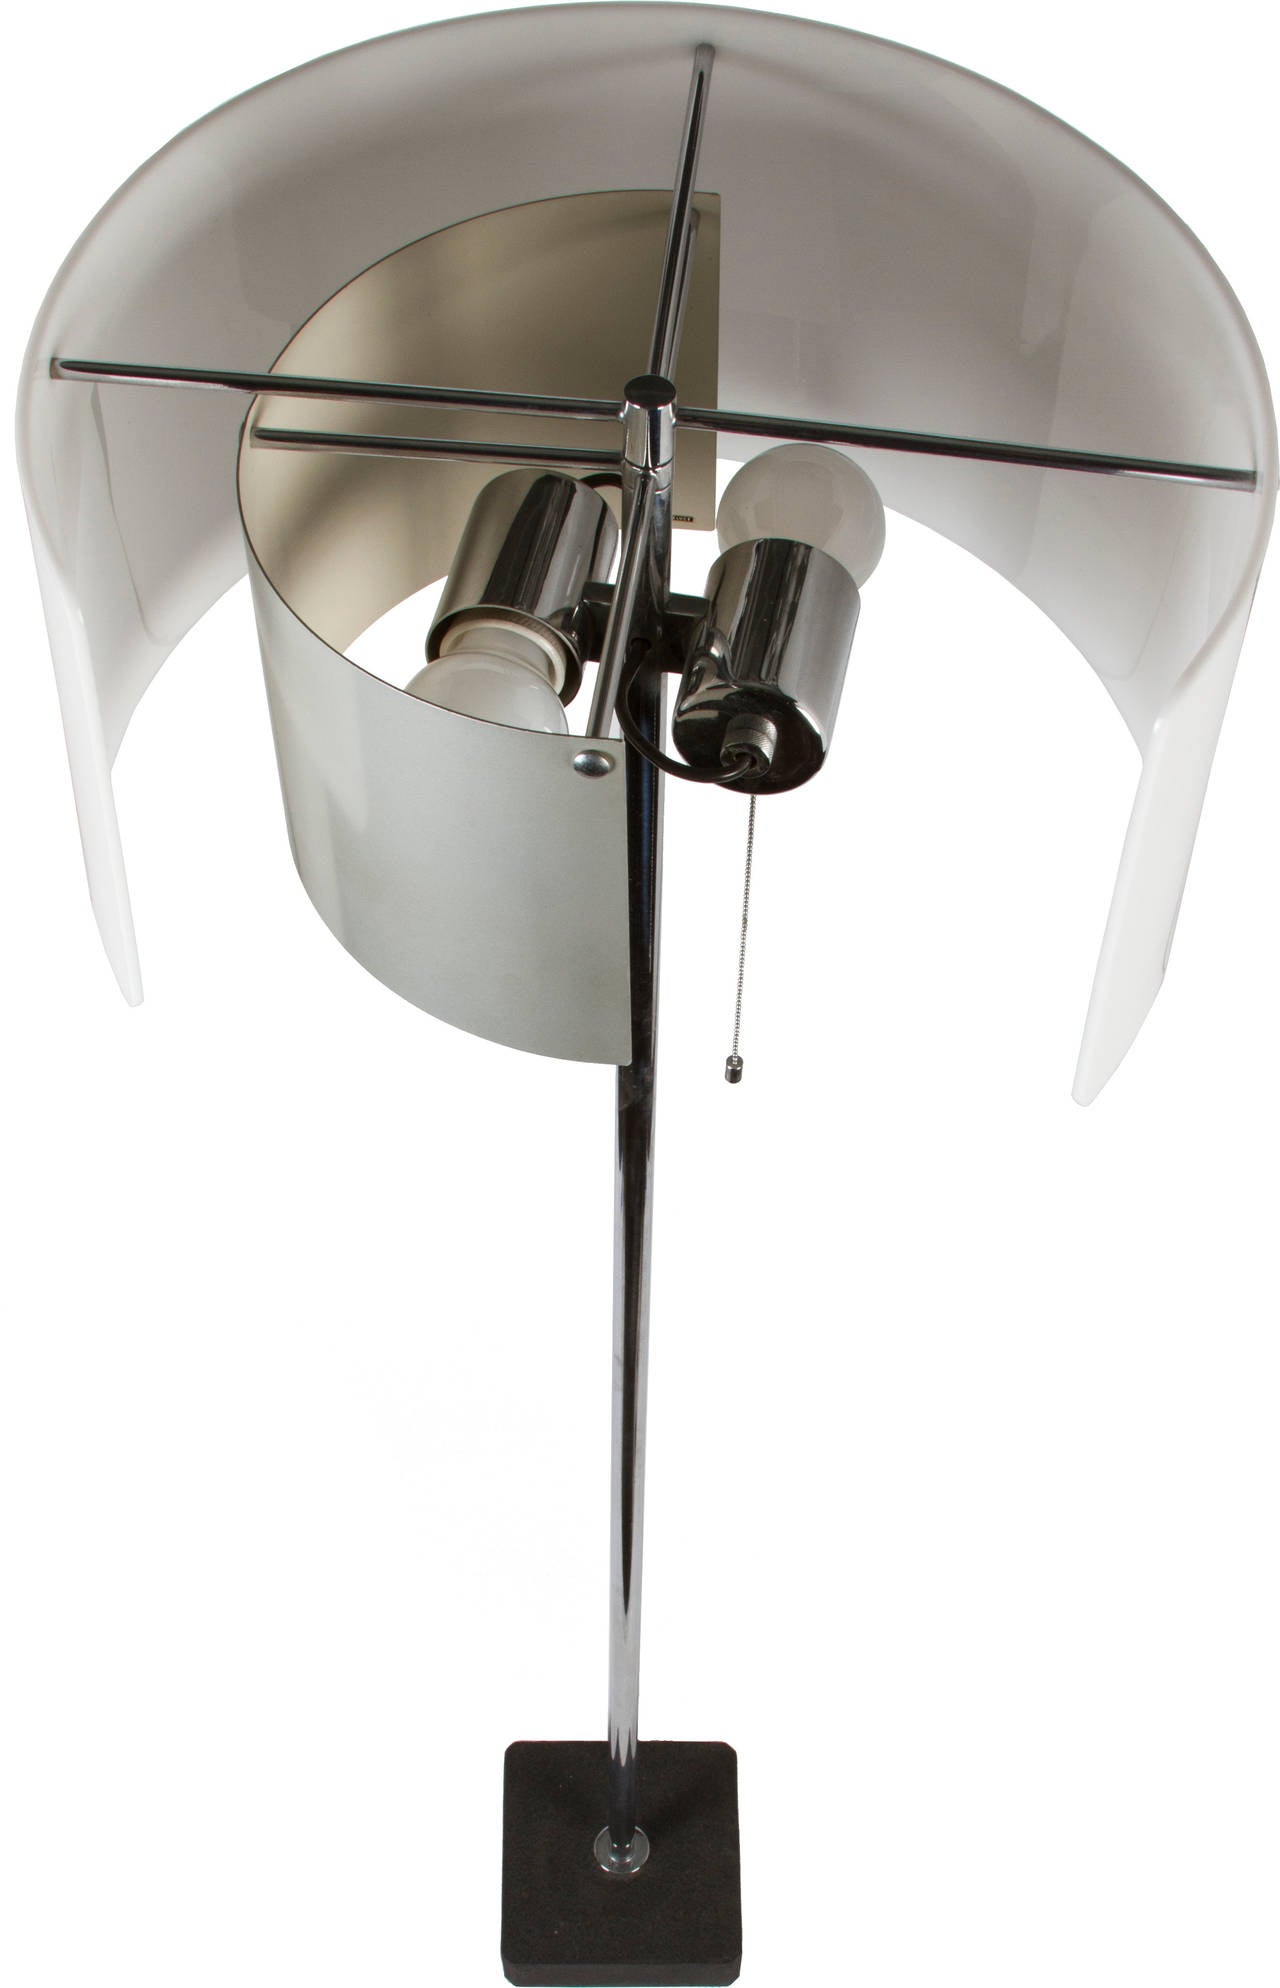 Mid-20th Century Floor Lamp Model 1056 for Arteluce by Gino Sarfatti